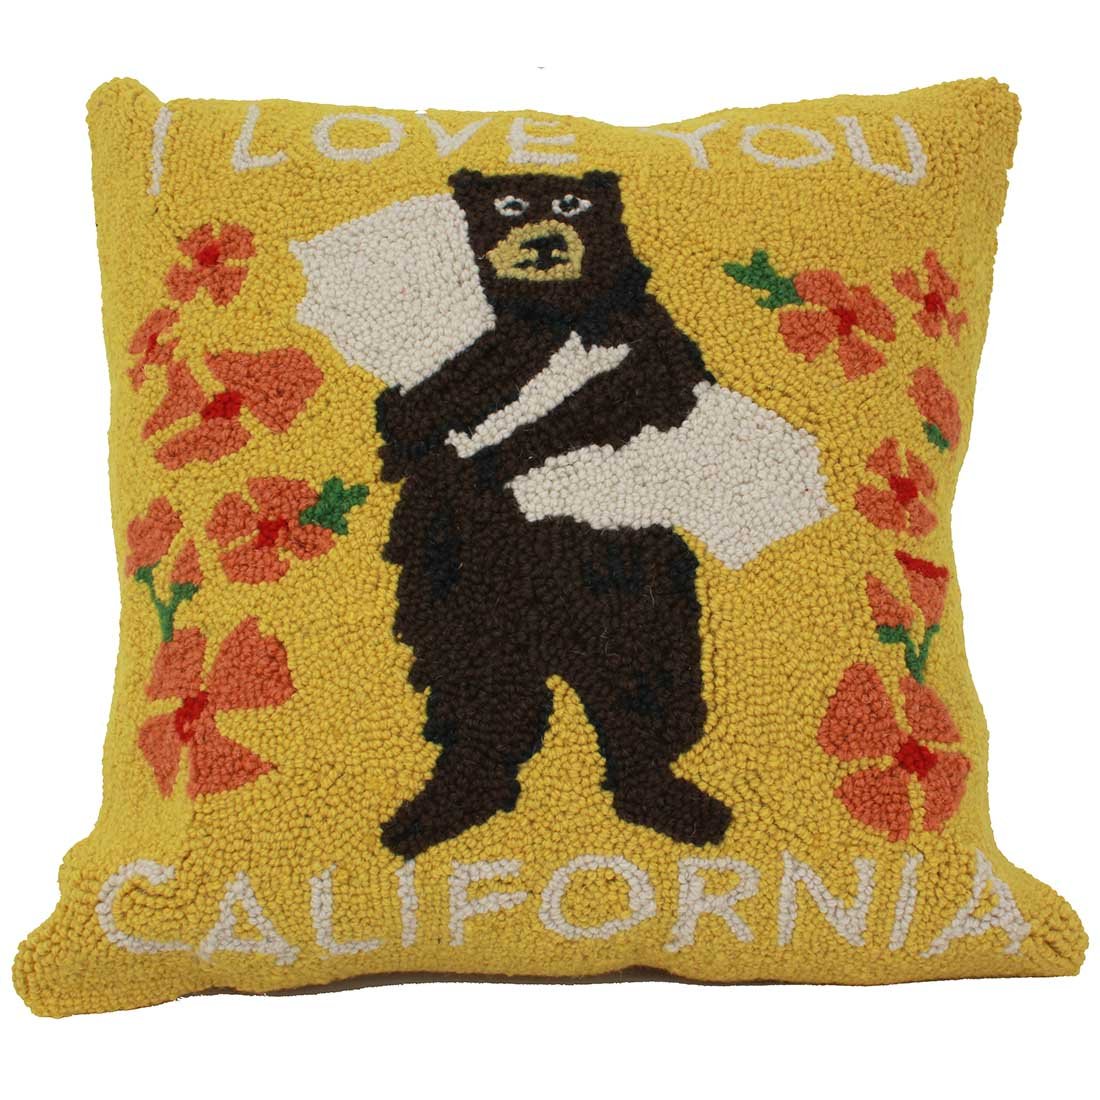 a yellow decorative pillow with a bear hugging California